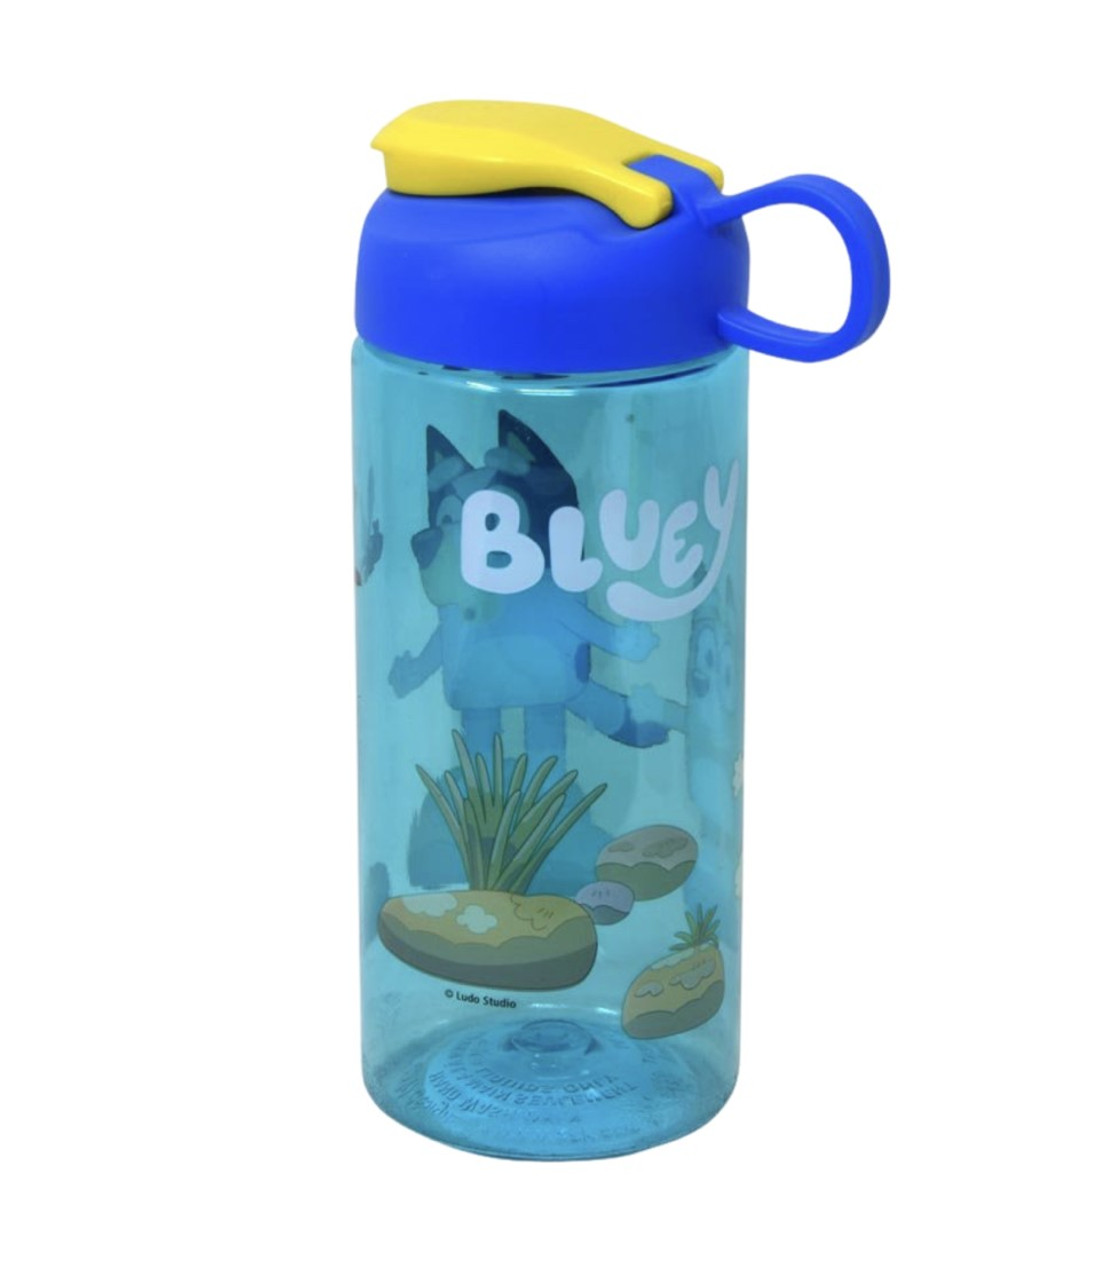 Bluey Atlantic Water Bottle, 16 oz.